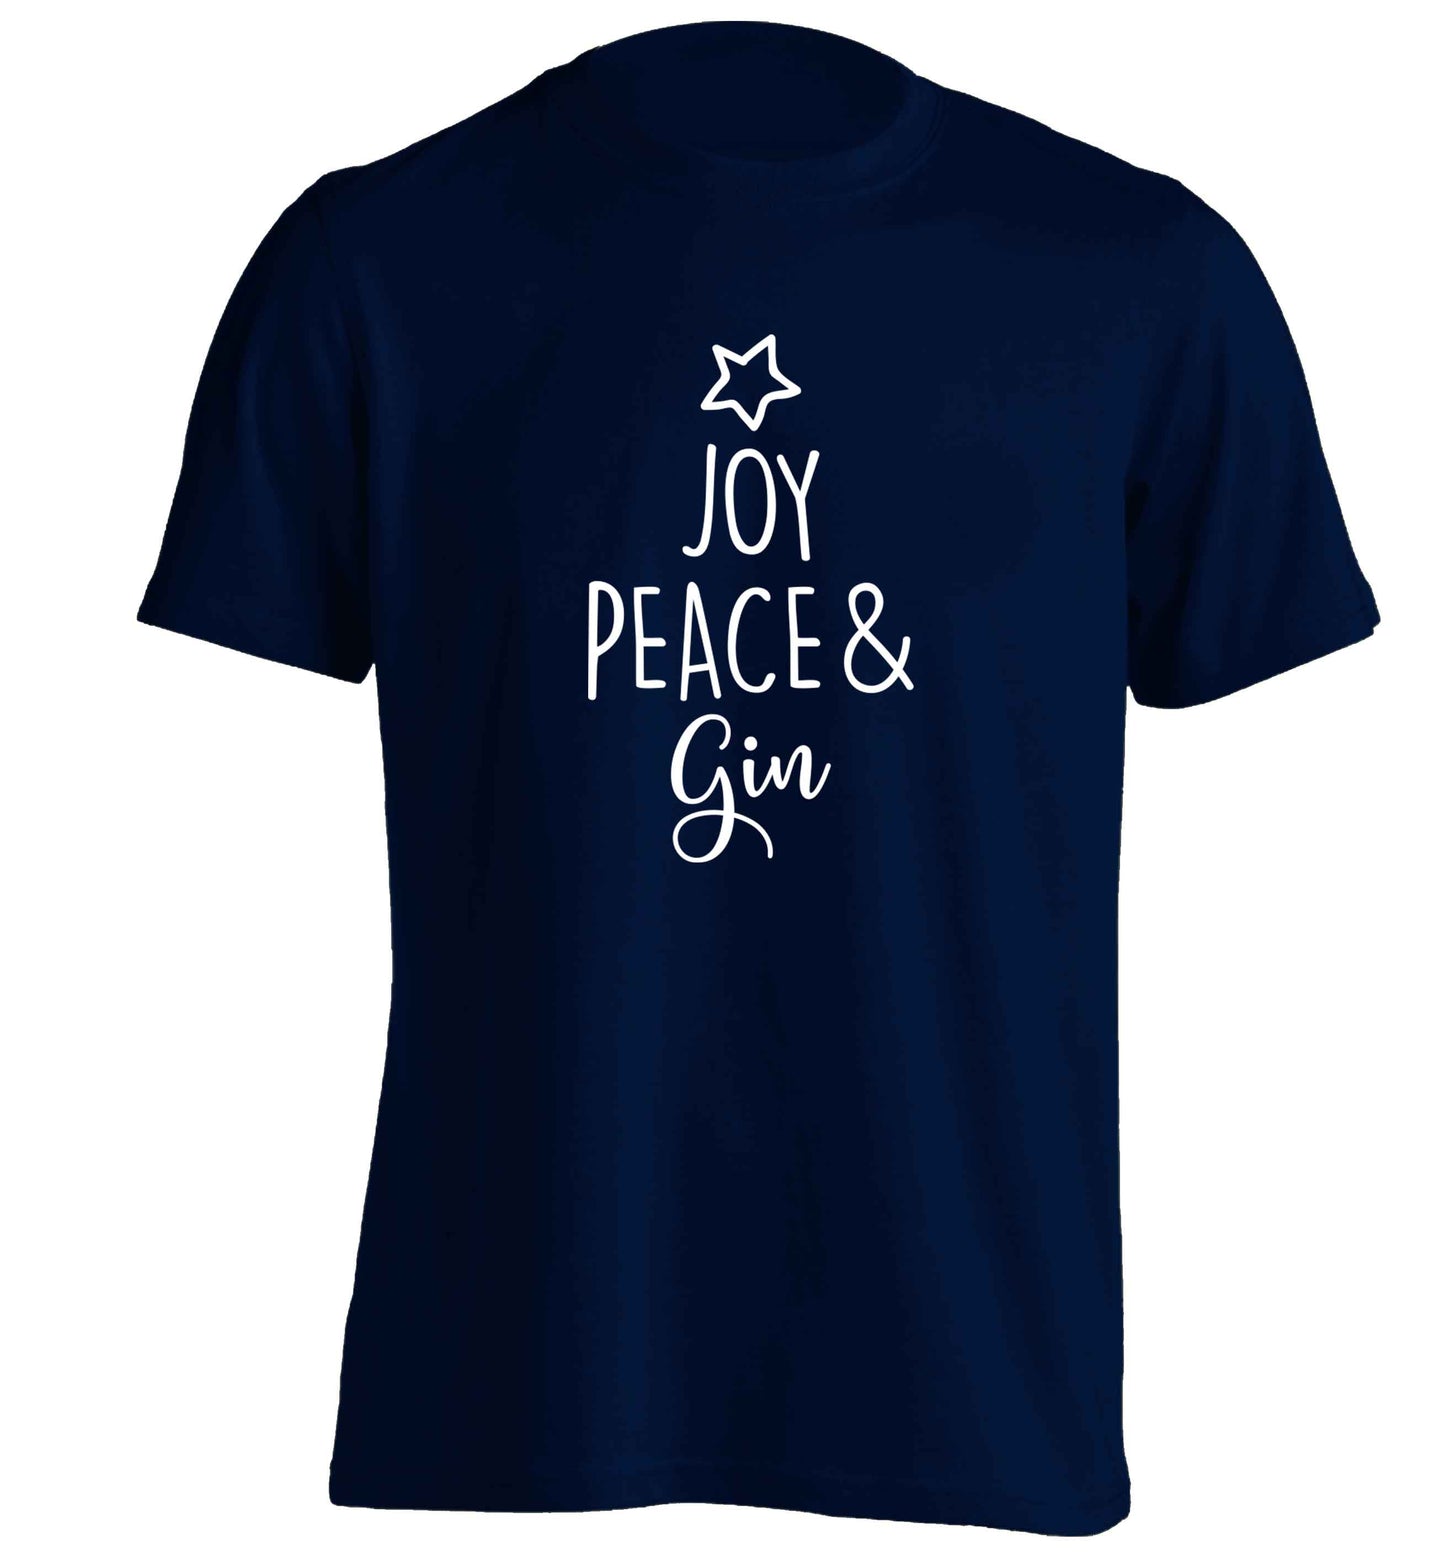 Joy peace and gin adults unisex navy Tshirt 2XL